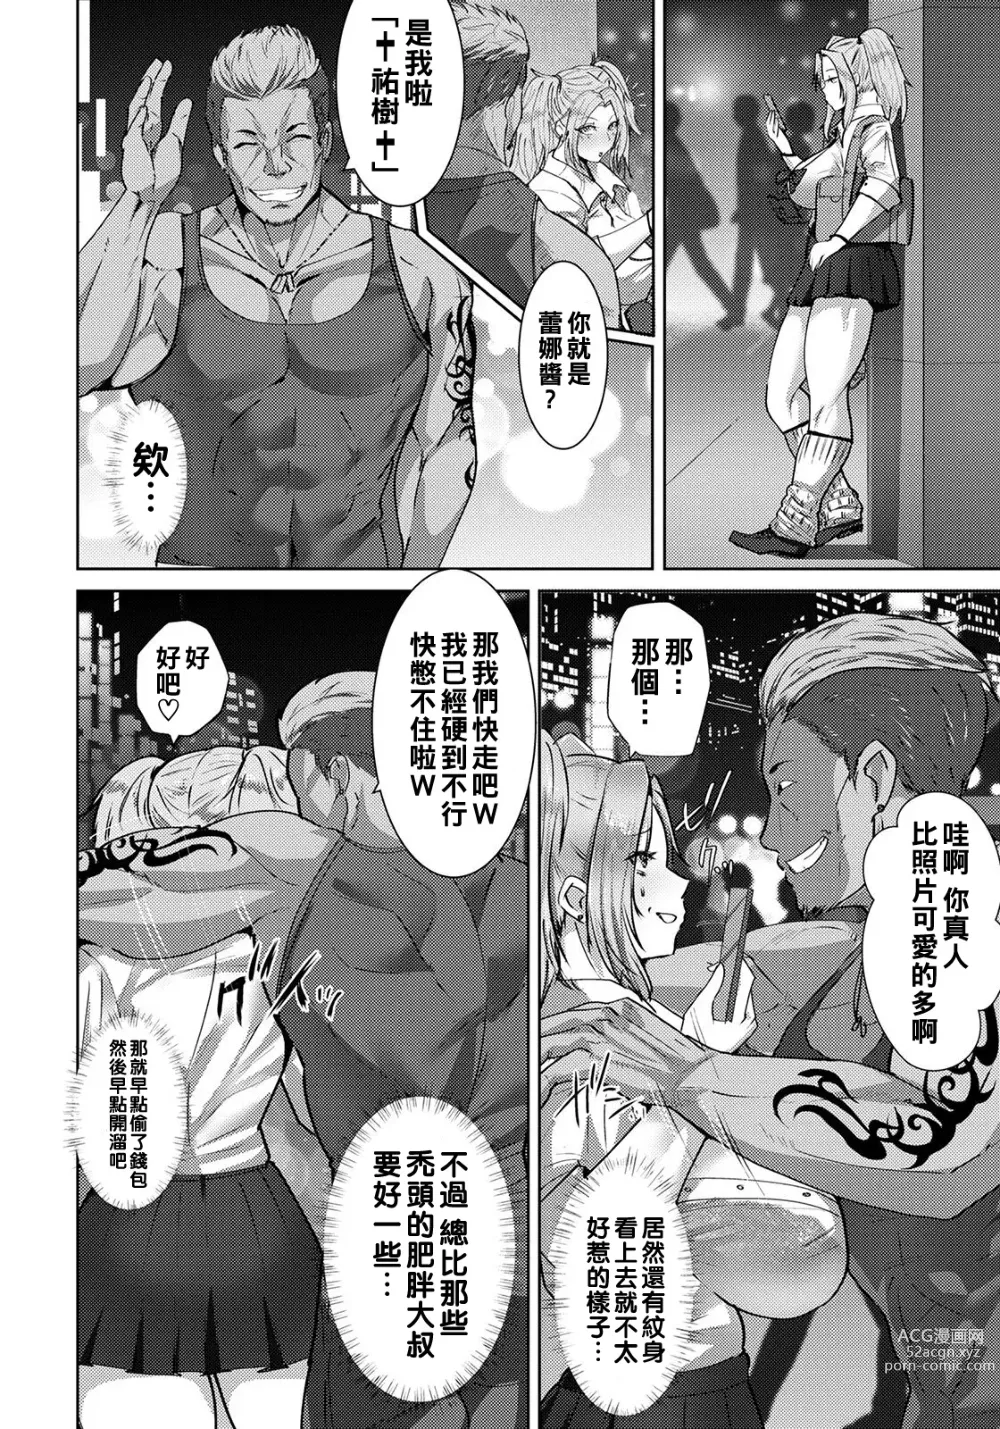 Page 4 of manga Amai Wana no Daishou